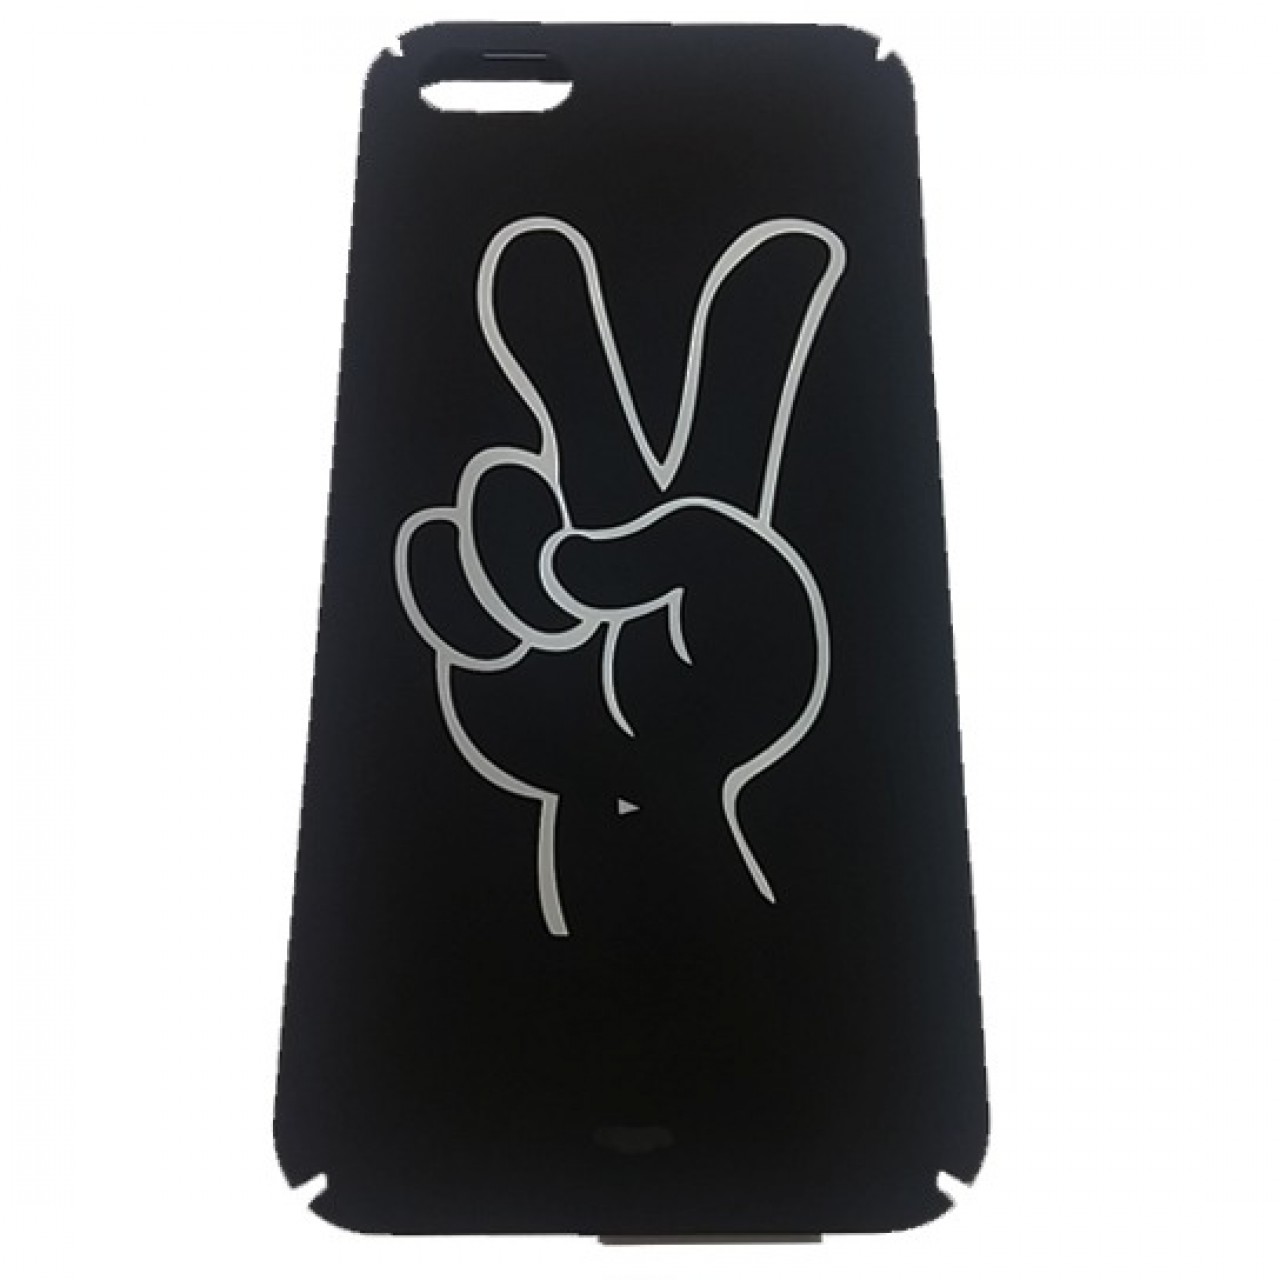 iPhone 5/5S Victory Logo Hard Case - Black